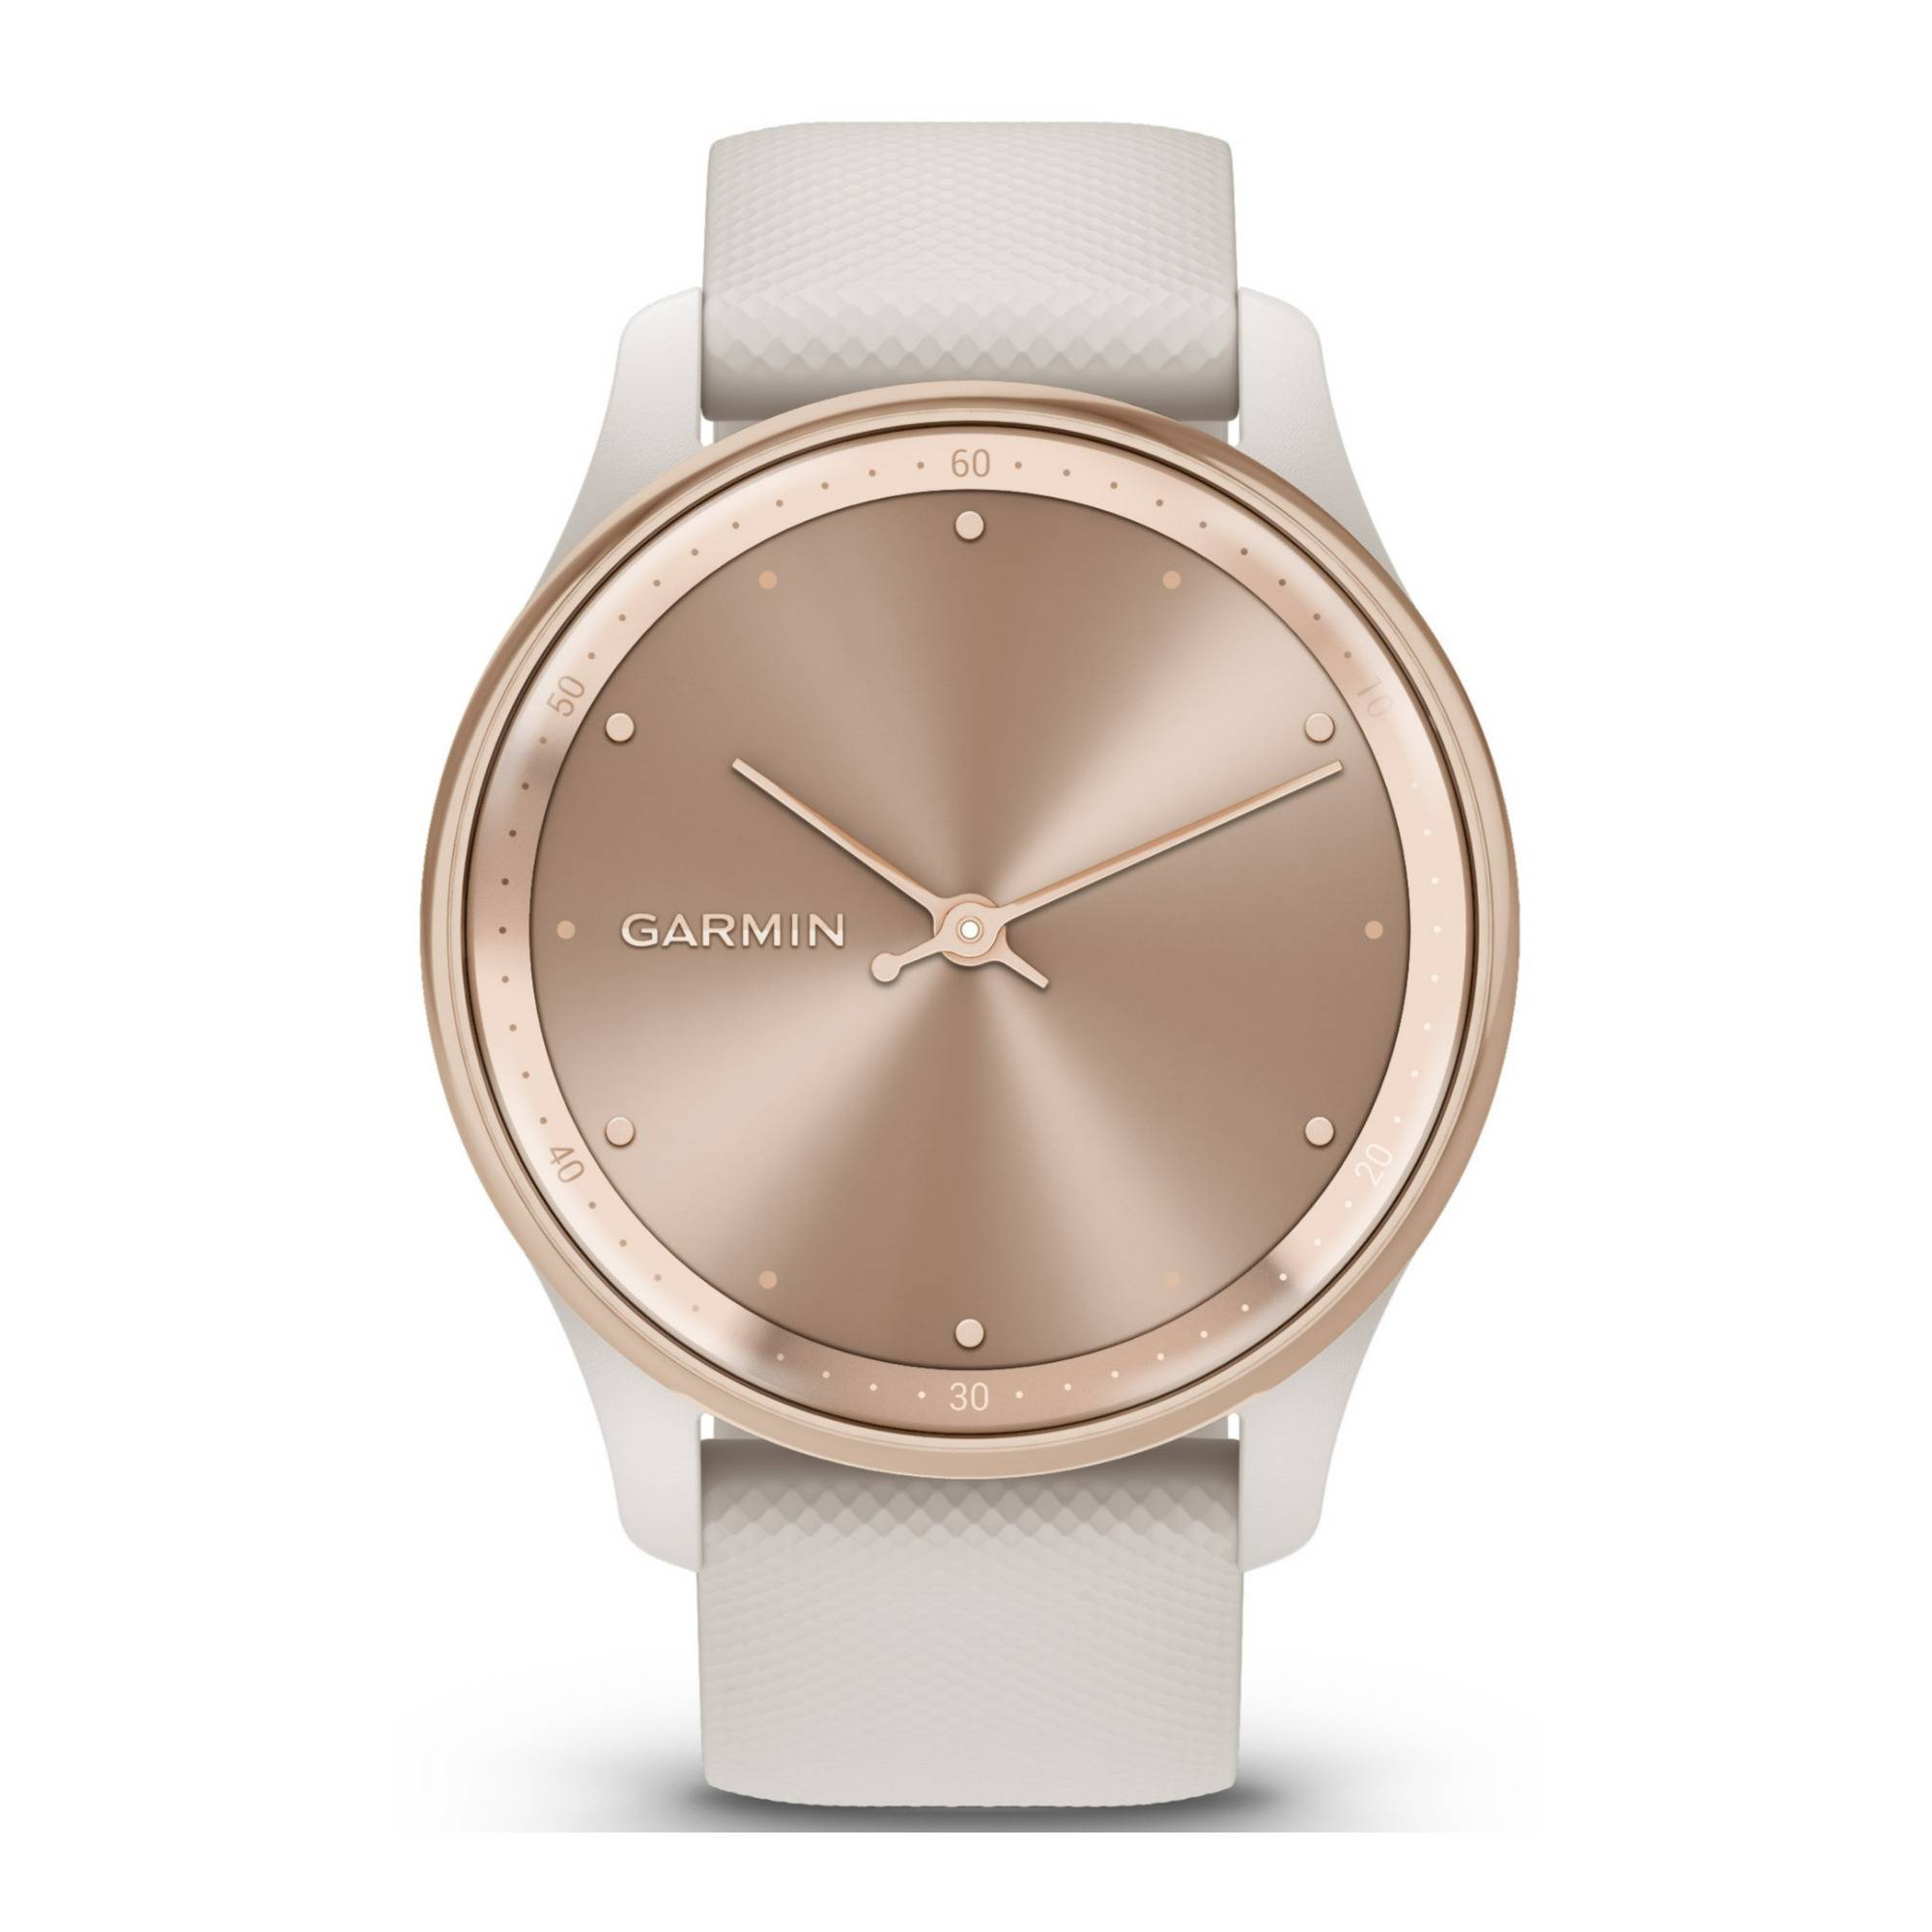 Garmin Vívomove Trend Hybrid Smartwatch with Silicon Band (Peach Gold Stainless Steel Bezel)